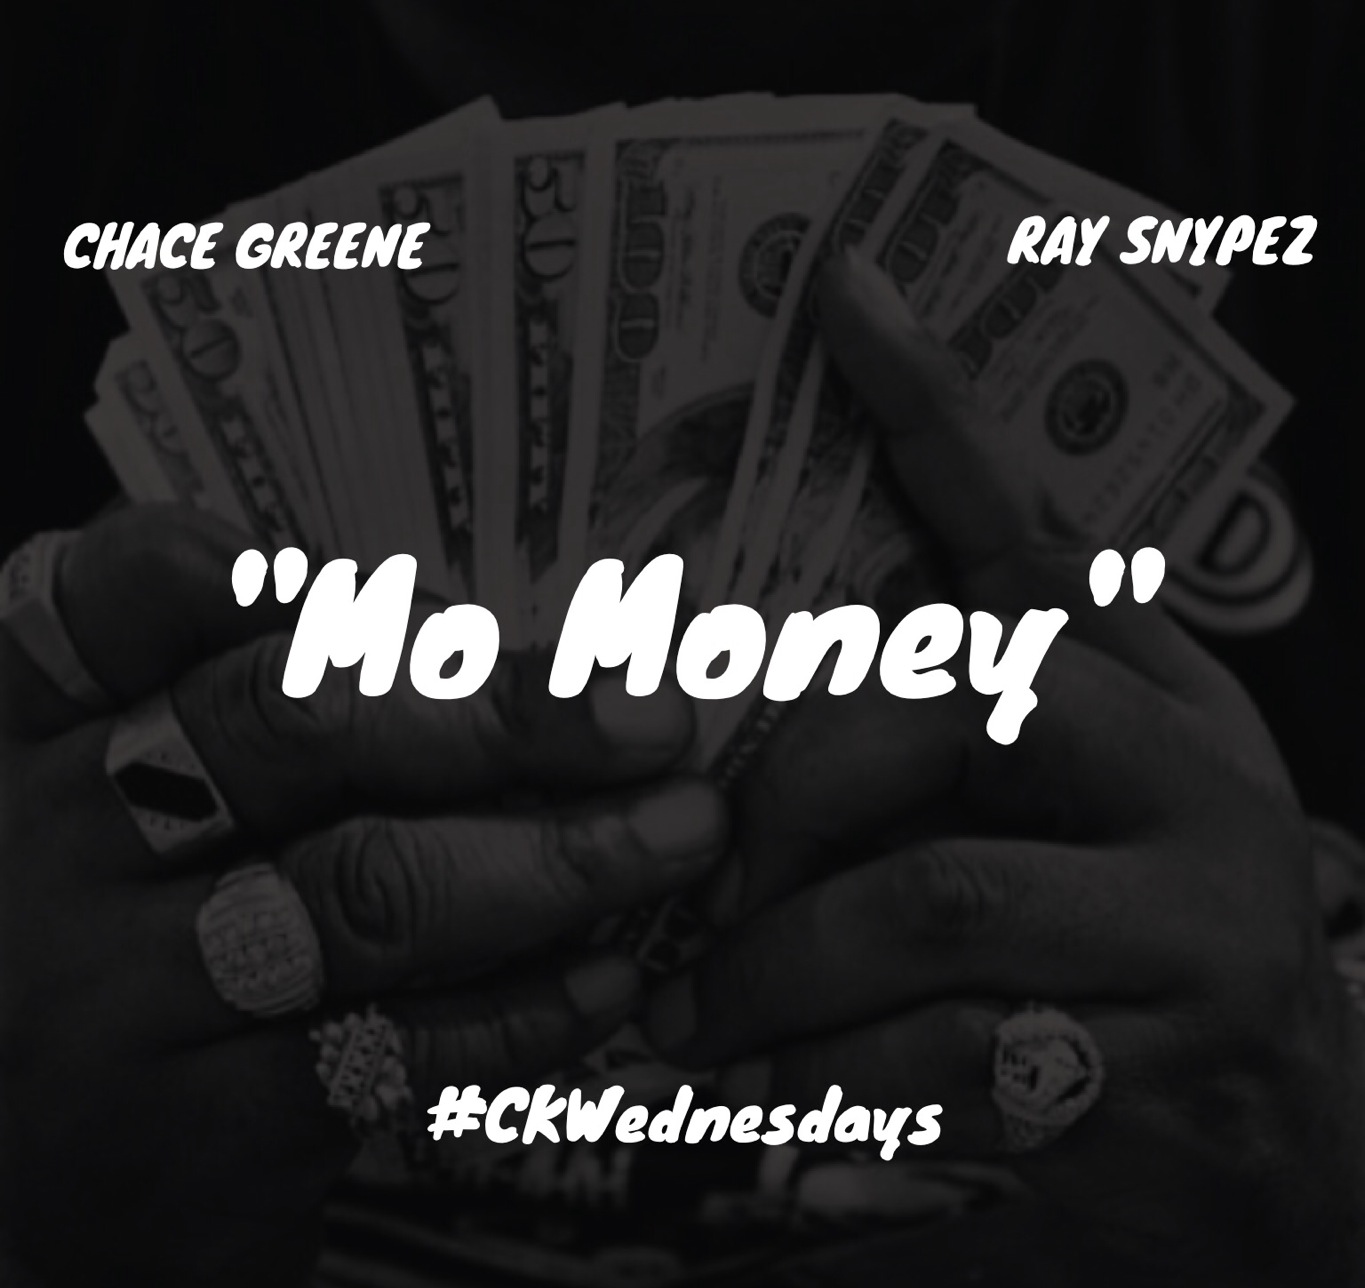 Chace Greene - "Mo Money" ft. Ray Snypes